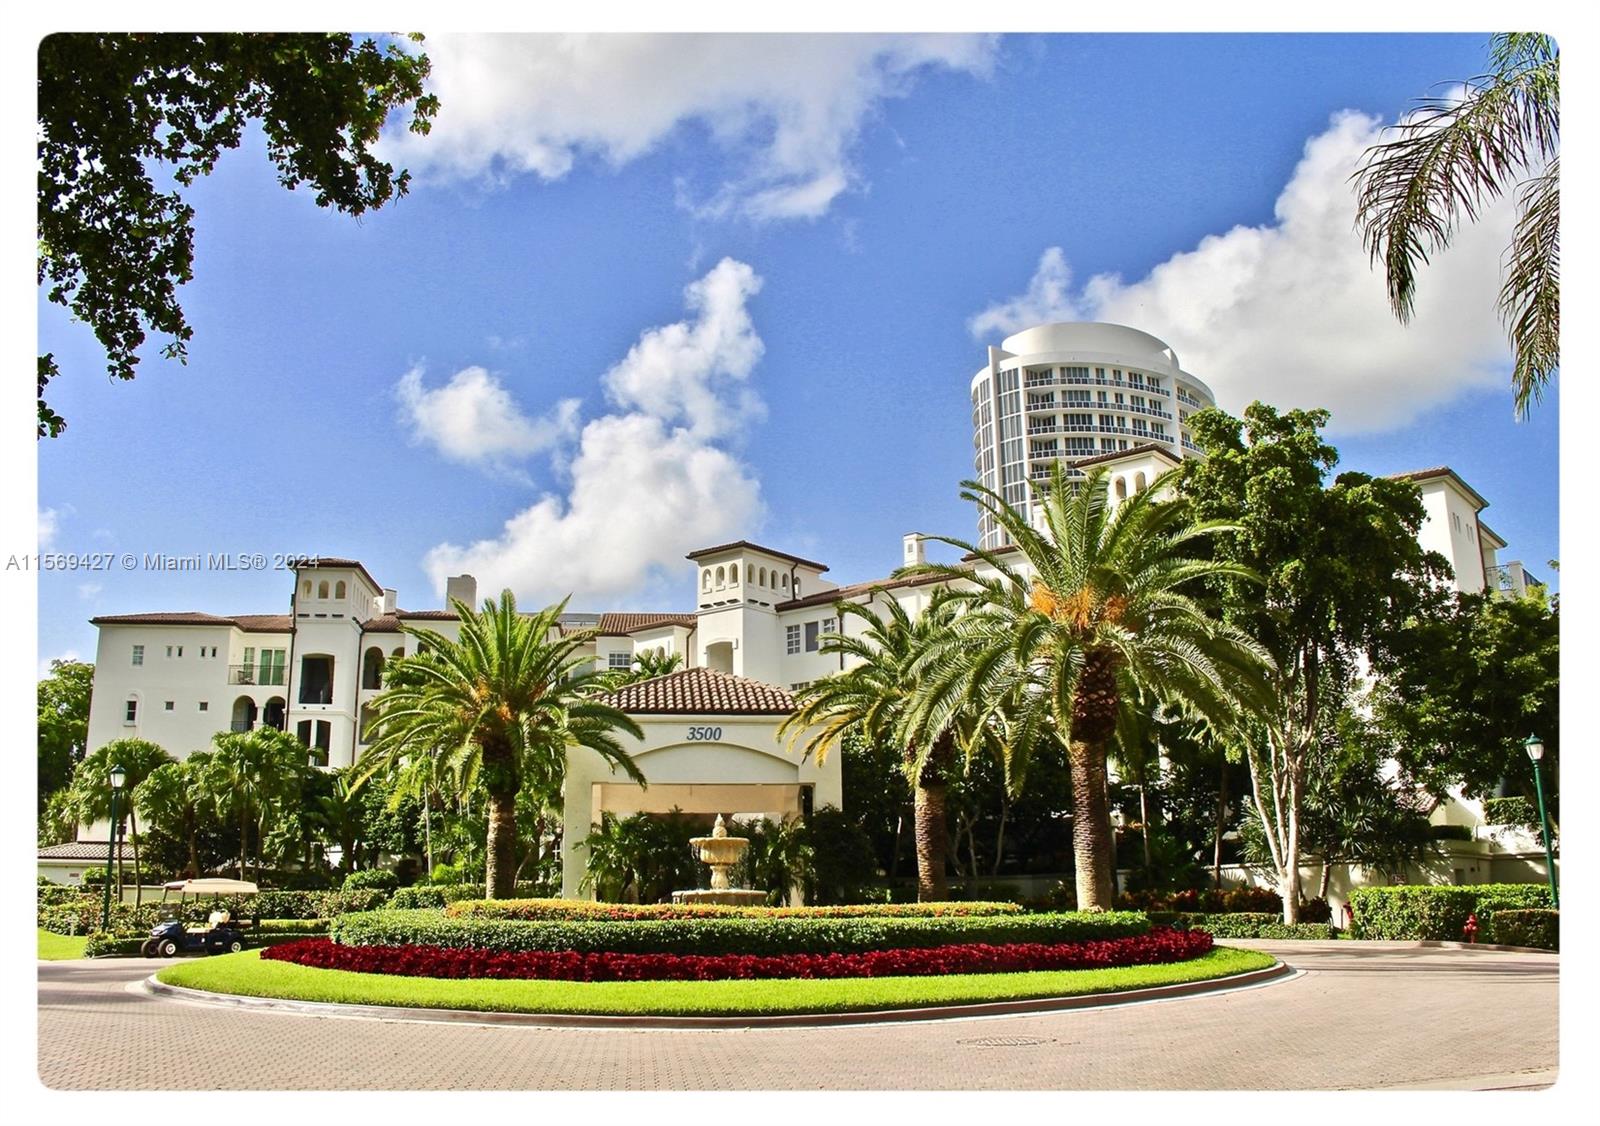 Property for Sale at 3500 Island Blvd Dph01, Aventura, Miami-Dade County, Florida - Bedrooms: 4 
Bathrooms: 5  - $2,700,000